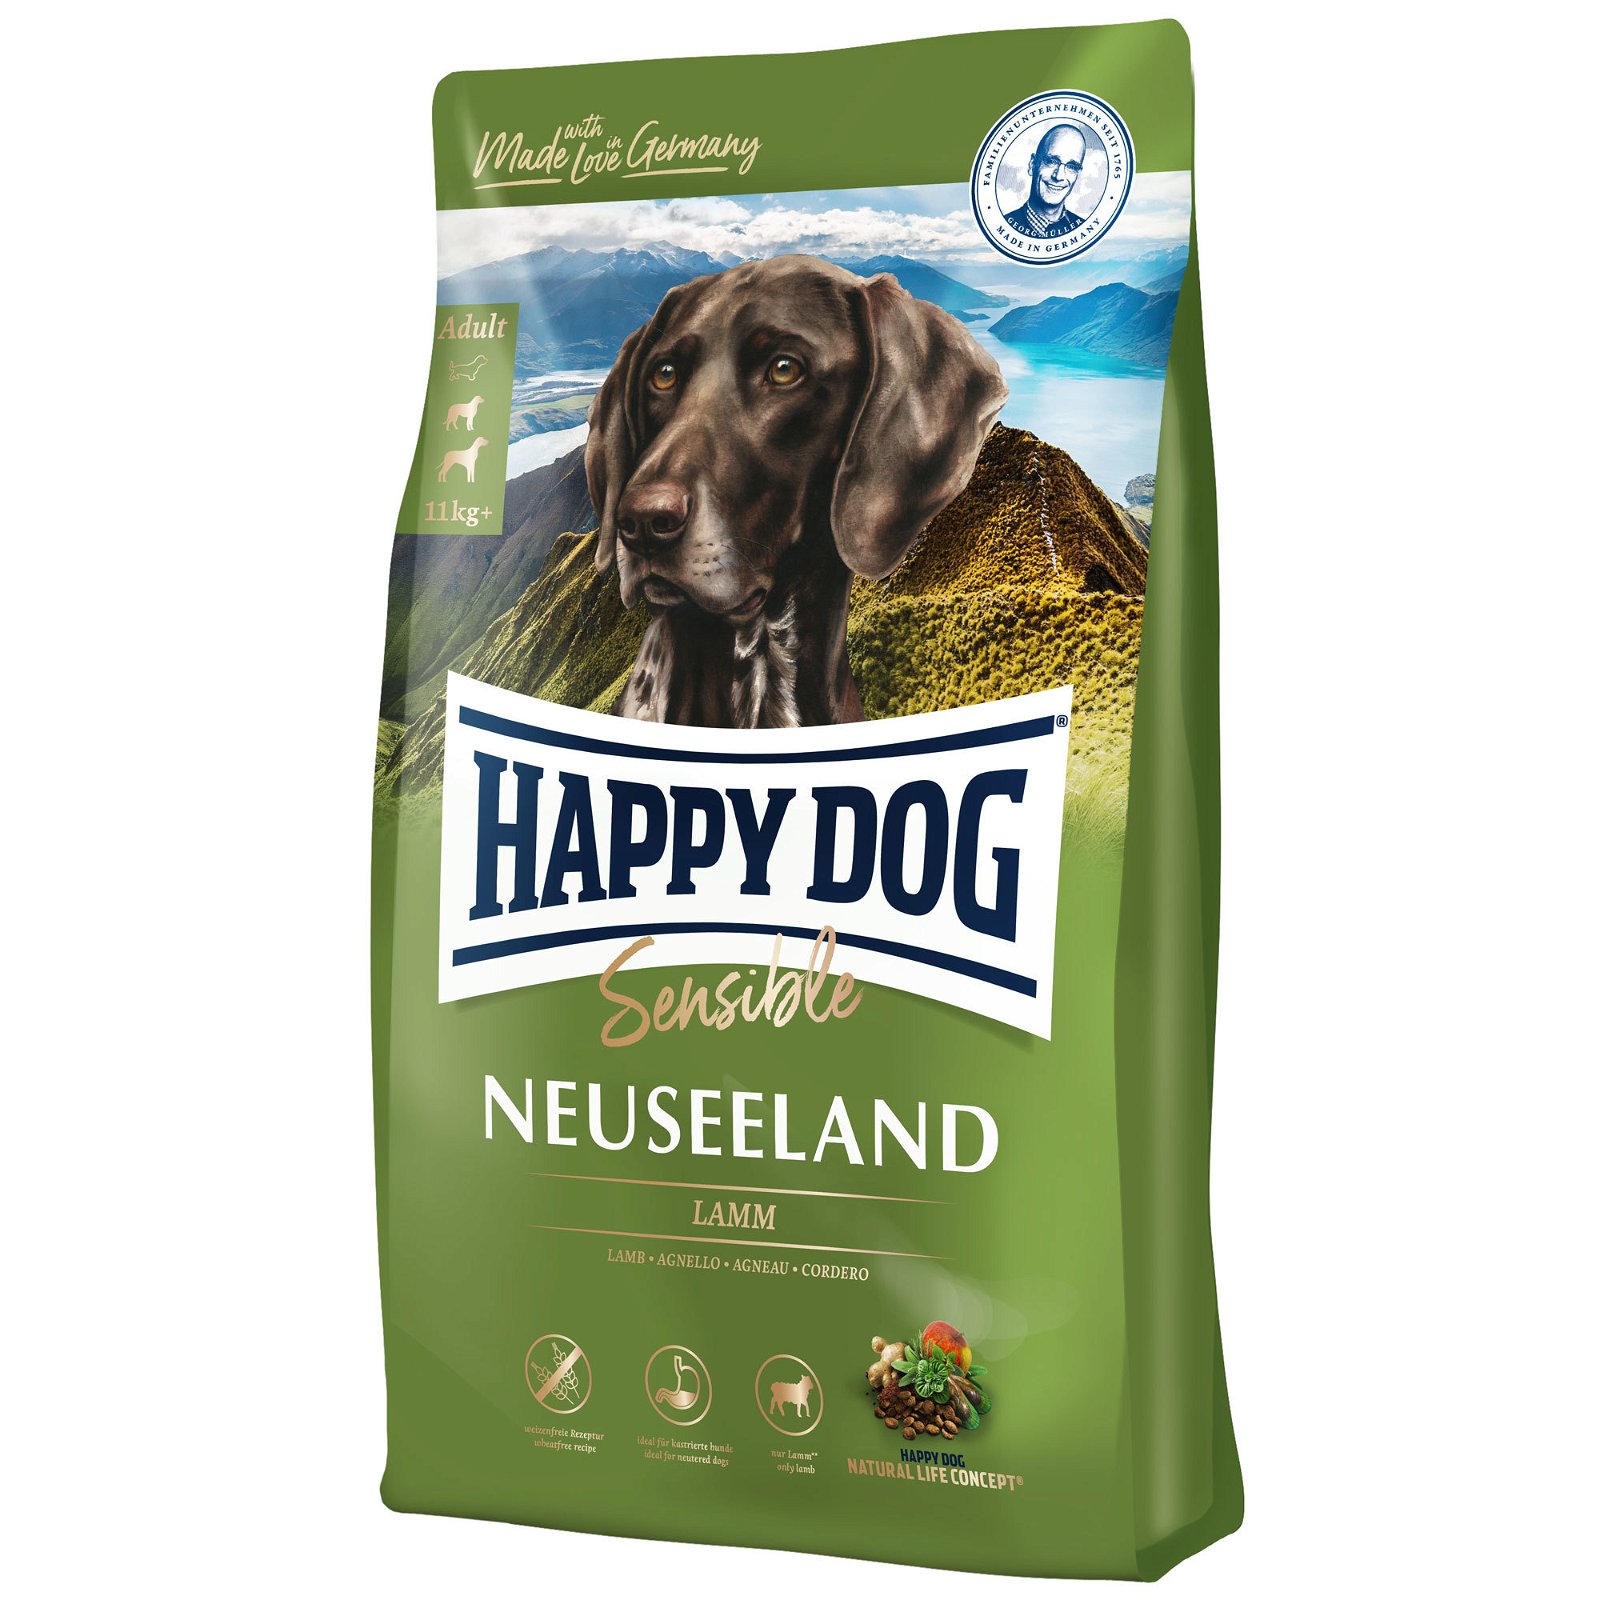 Happy Dog Sensible Neuseeland Lamm, 1 kg